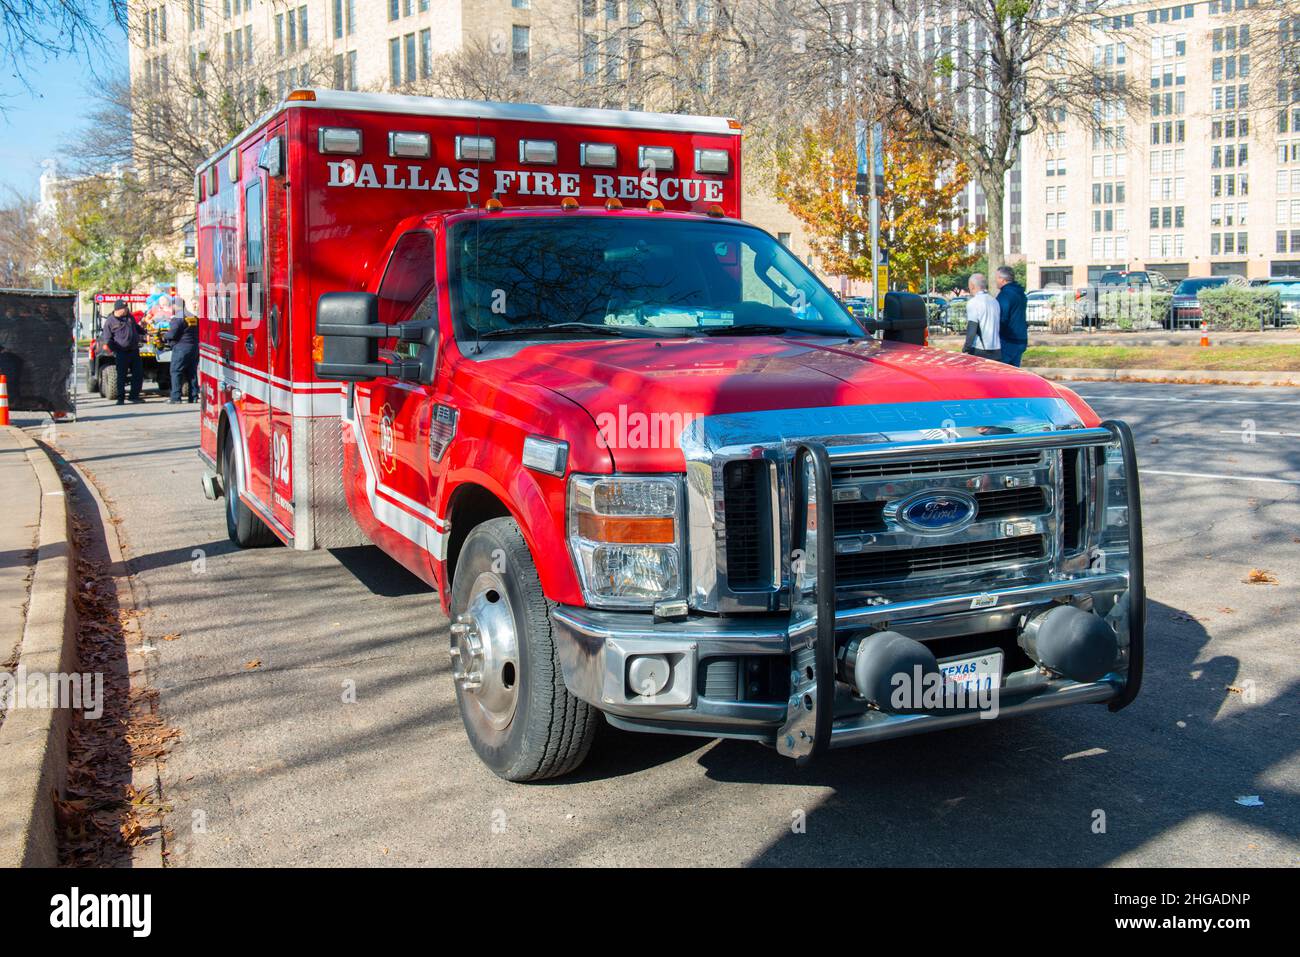 Dallas Fire Department rescue vehicle in downtown Dallas, Texas TX, USA. Stock Photo